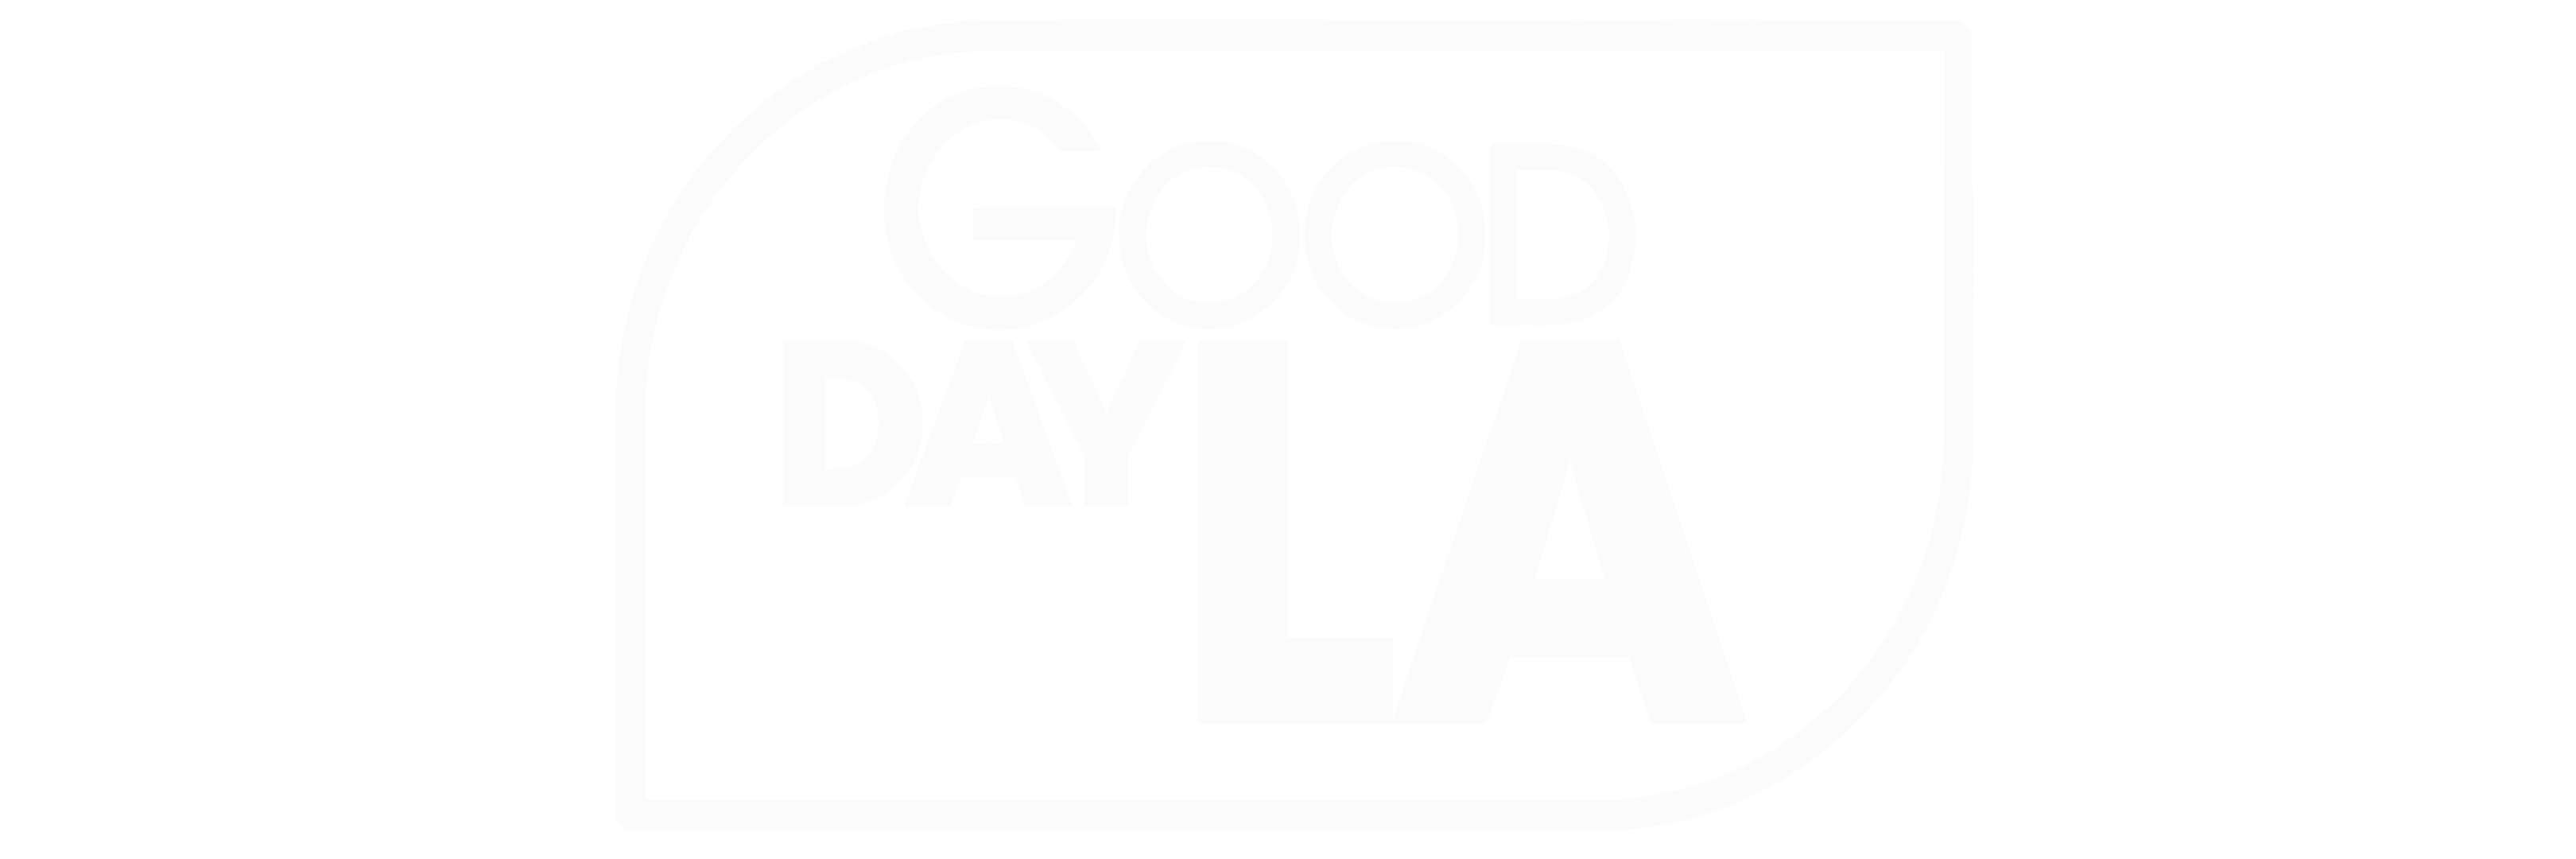 Good Day LA Logo